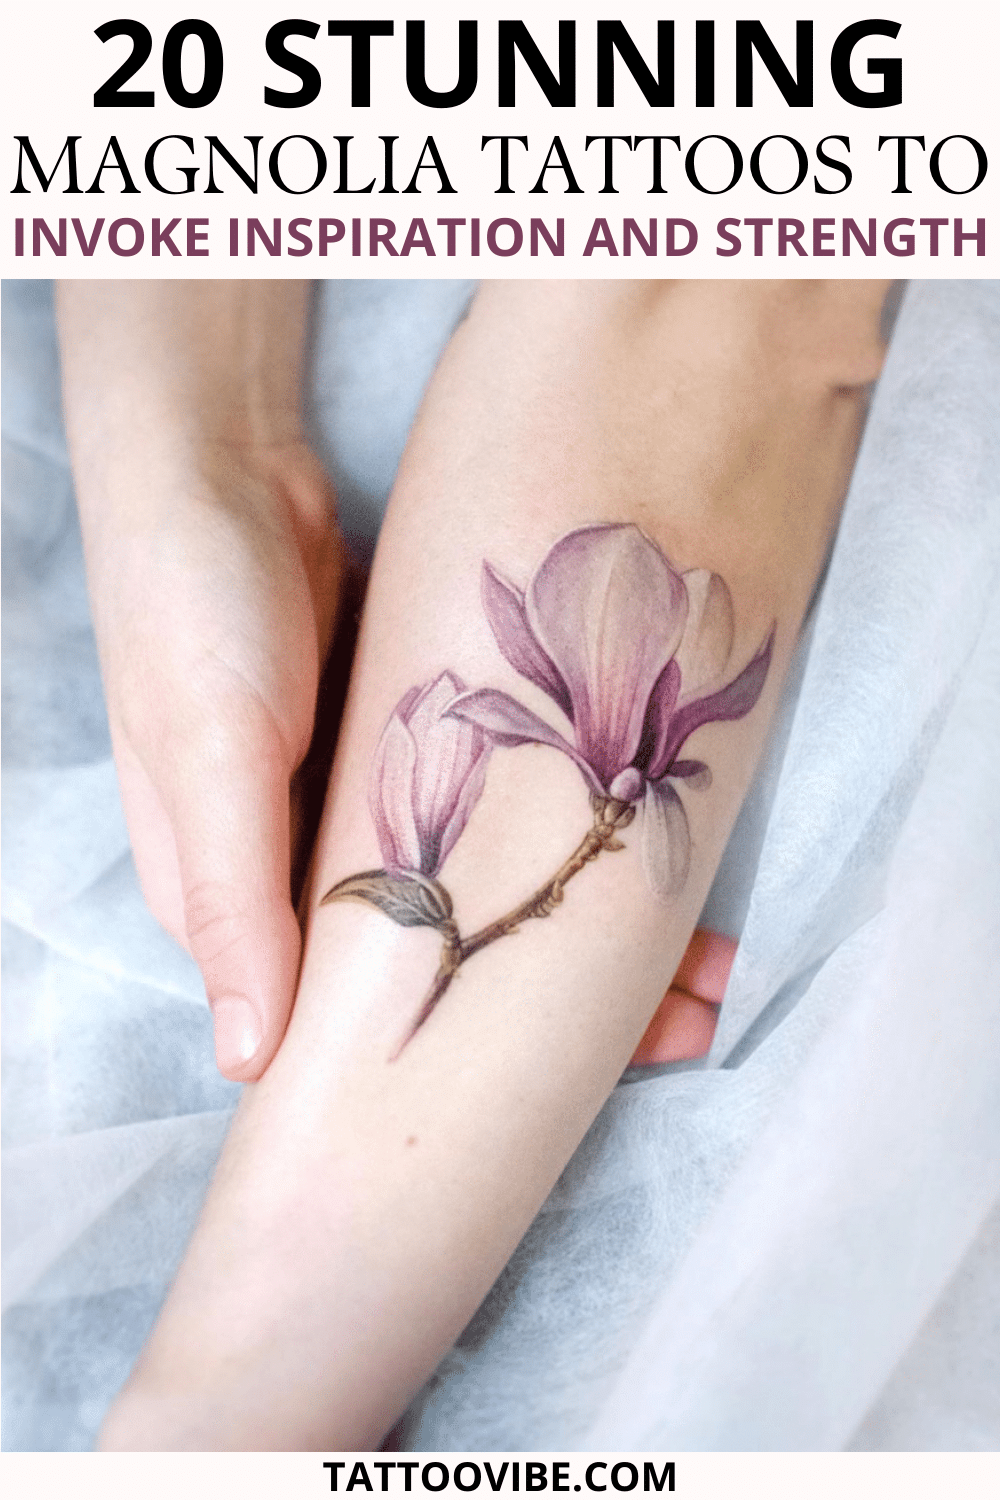 20 Stunning Magnolia Tattoos To Invoke Inspiration and Strength